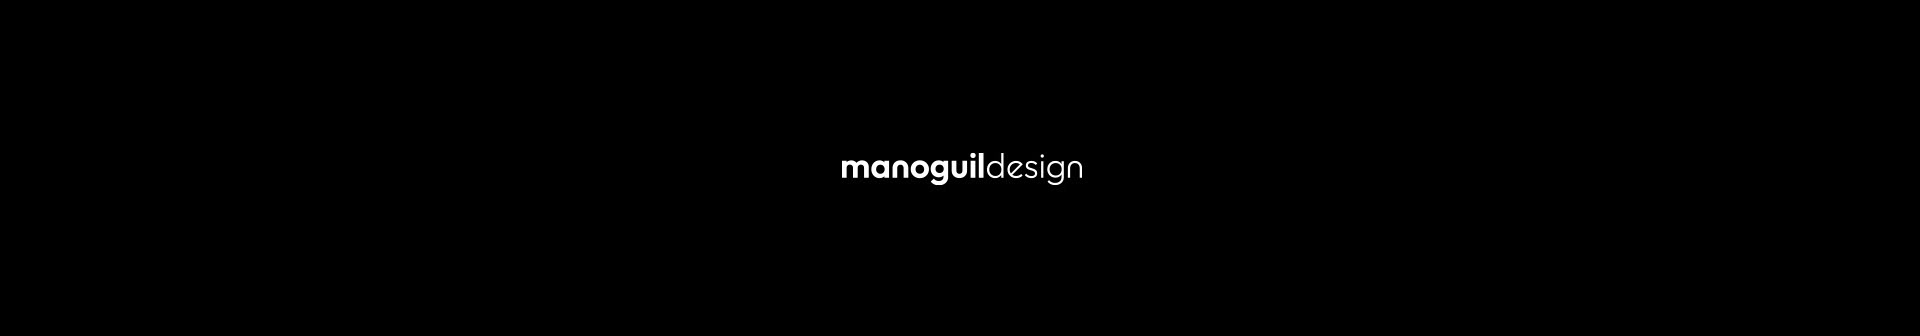 manoguil design's profile banner